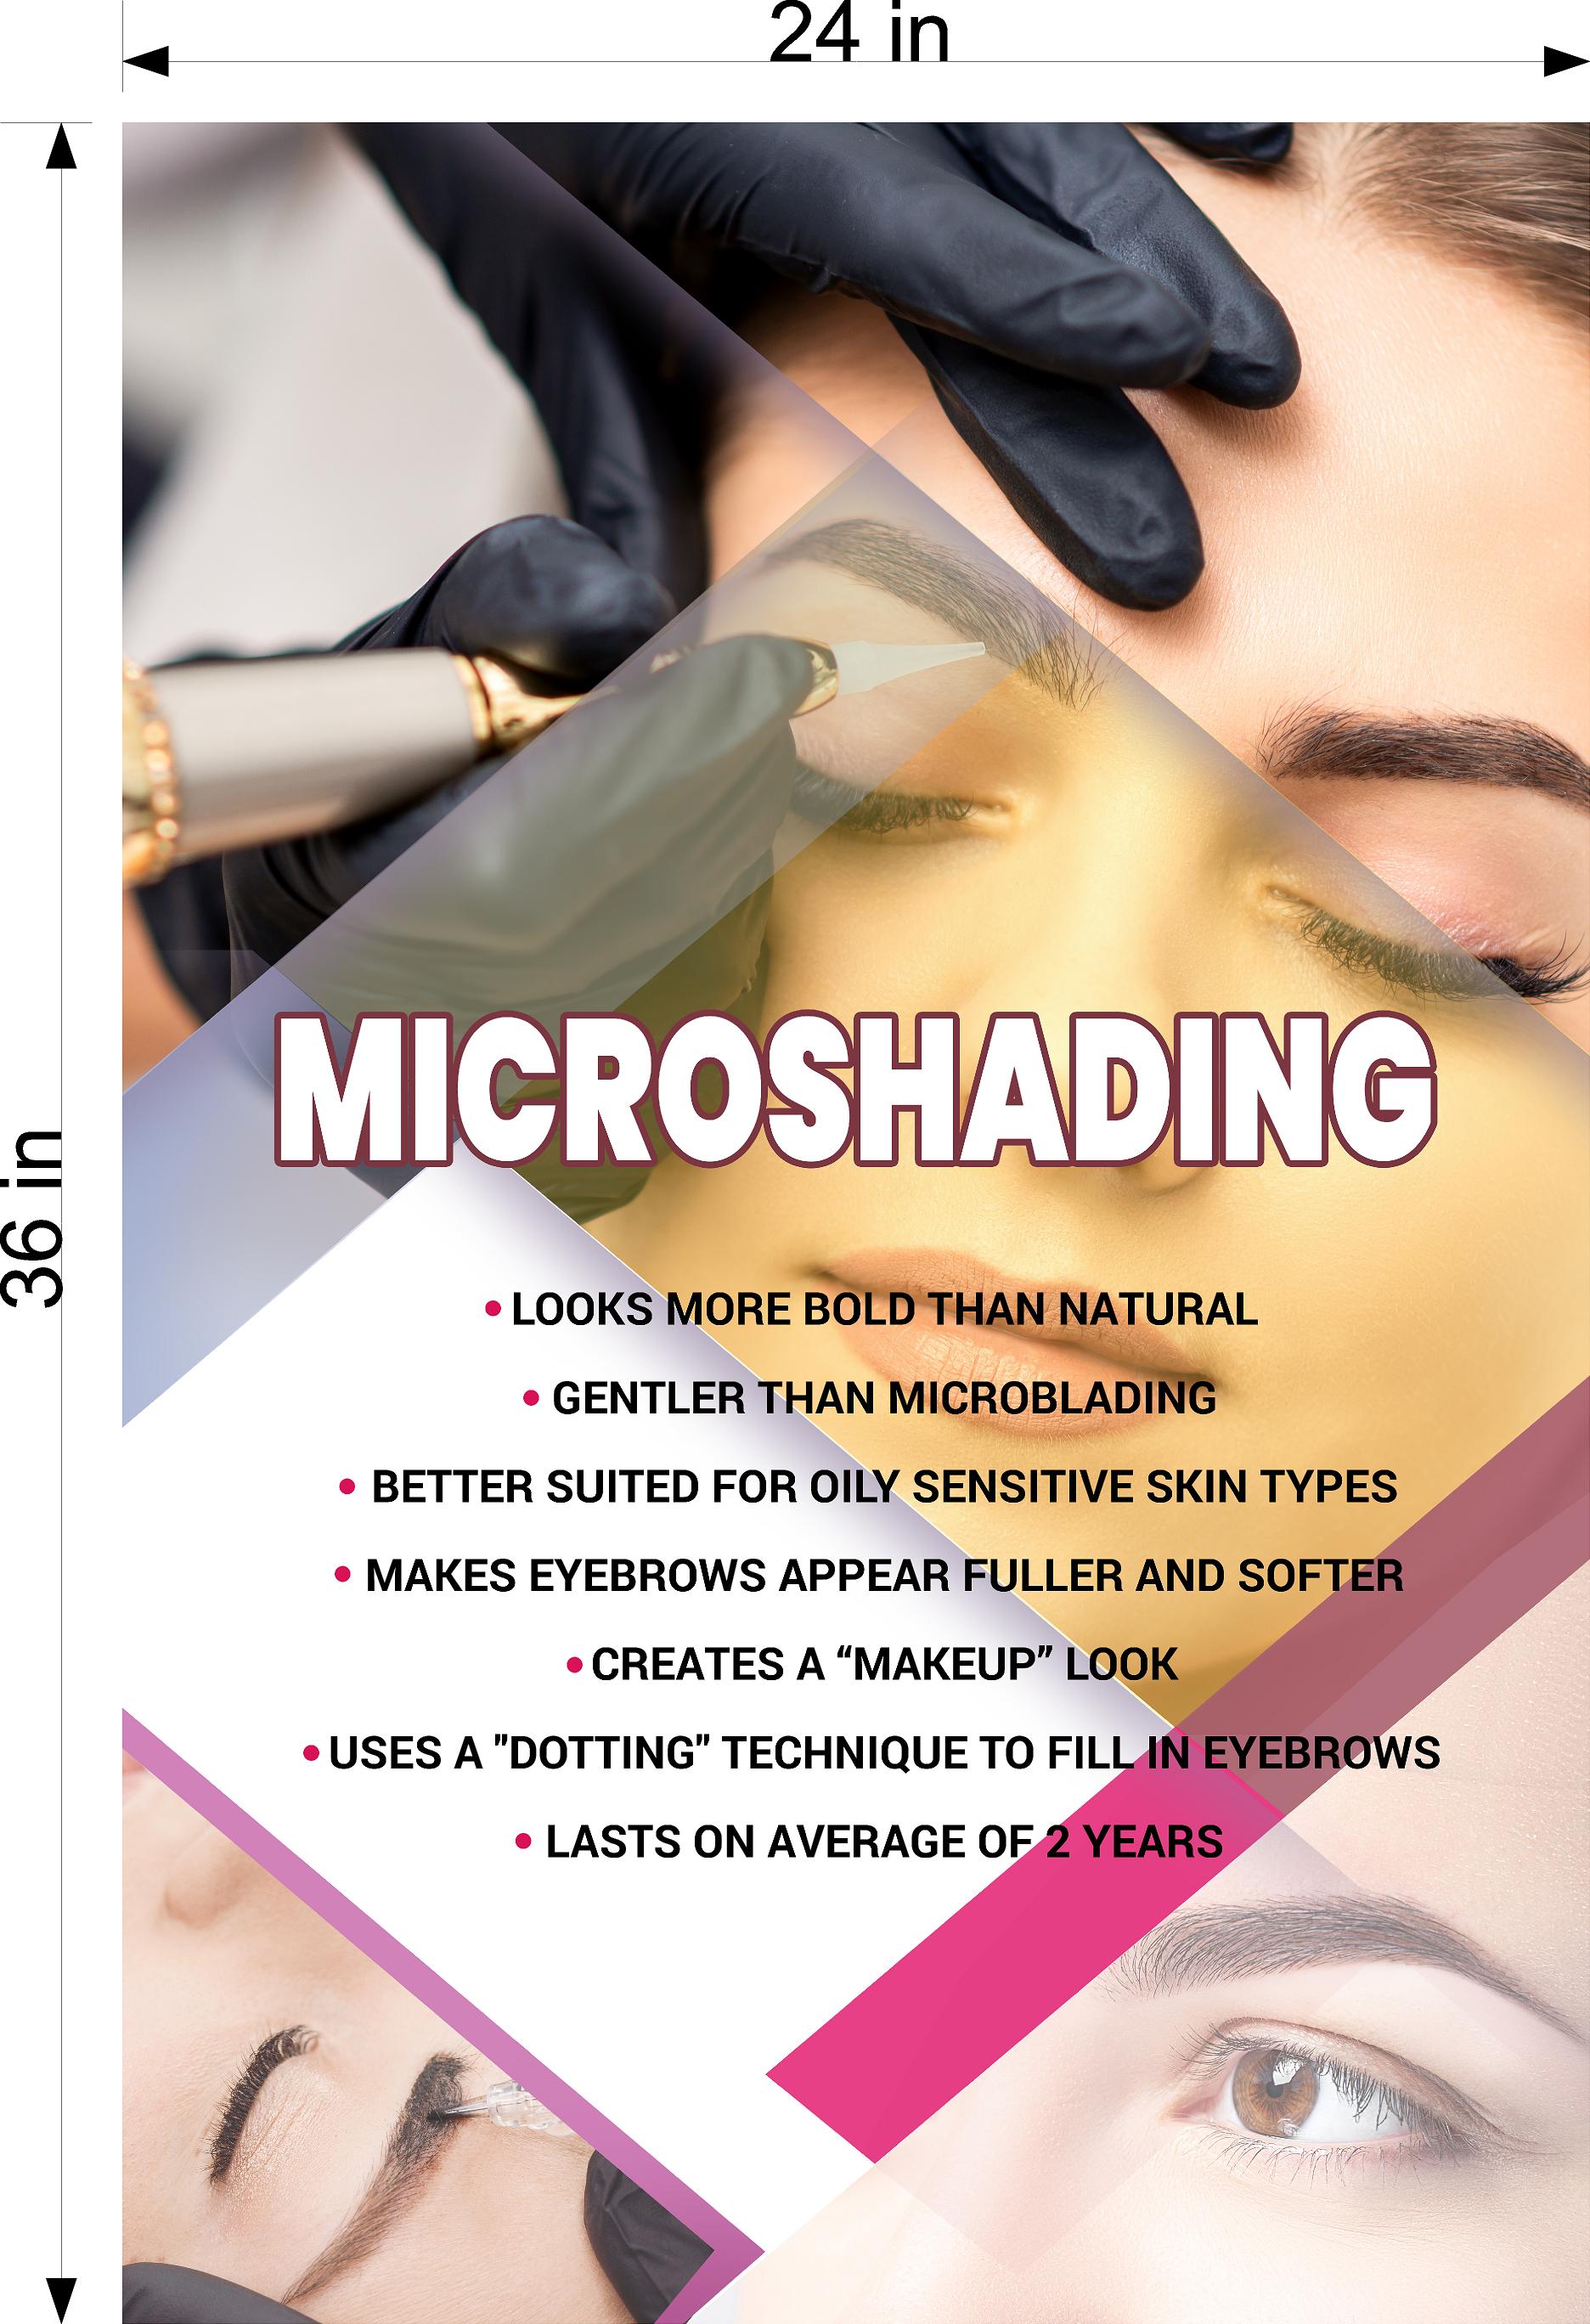 Microshading 08 Photo-Realistic Paper Poster Non-Laminated Services Semi-permanent Make-Up shading Eyebrows Vertical